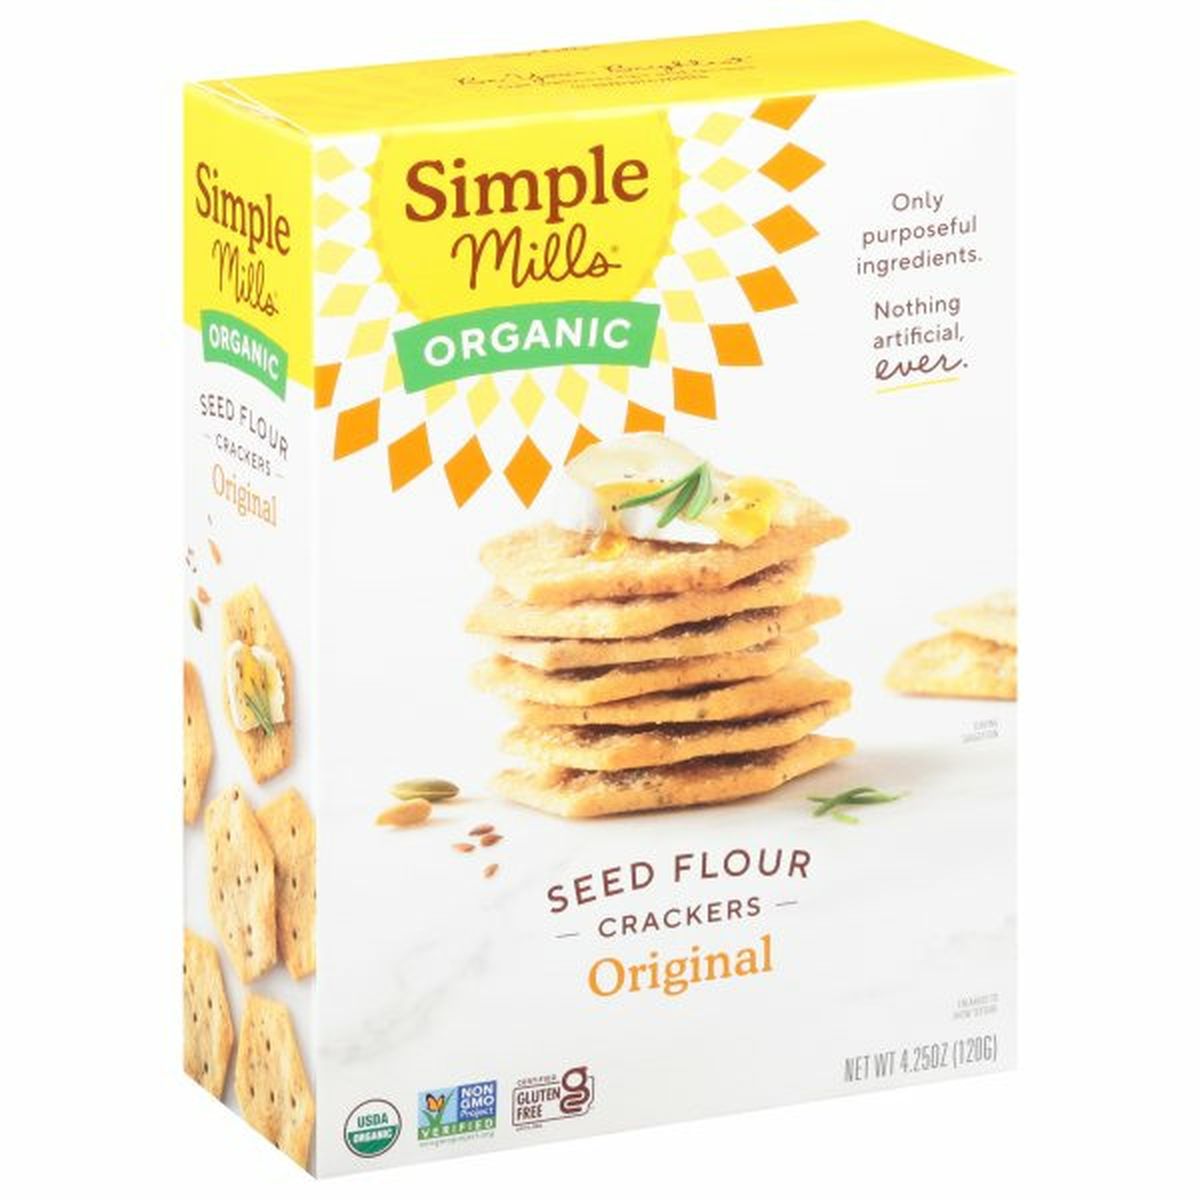 Calories in Simple Mills Organic Crackers, Original, Seed Flour